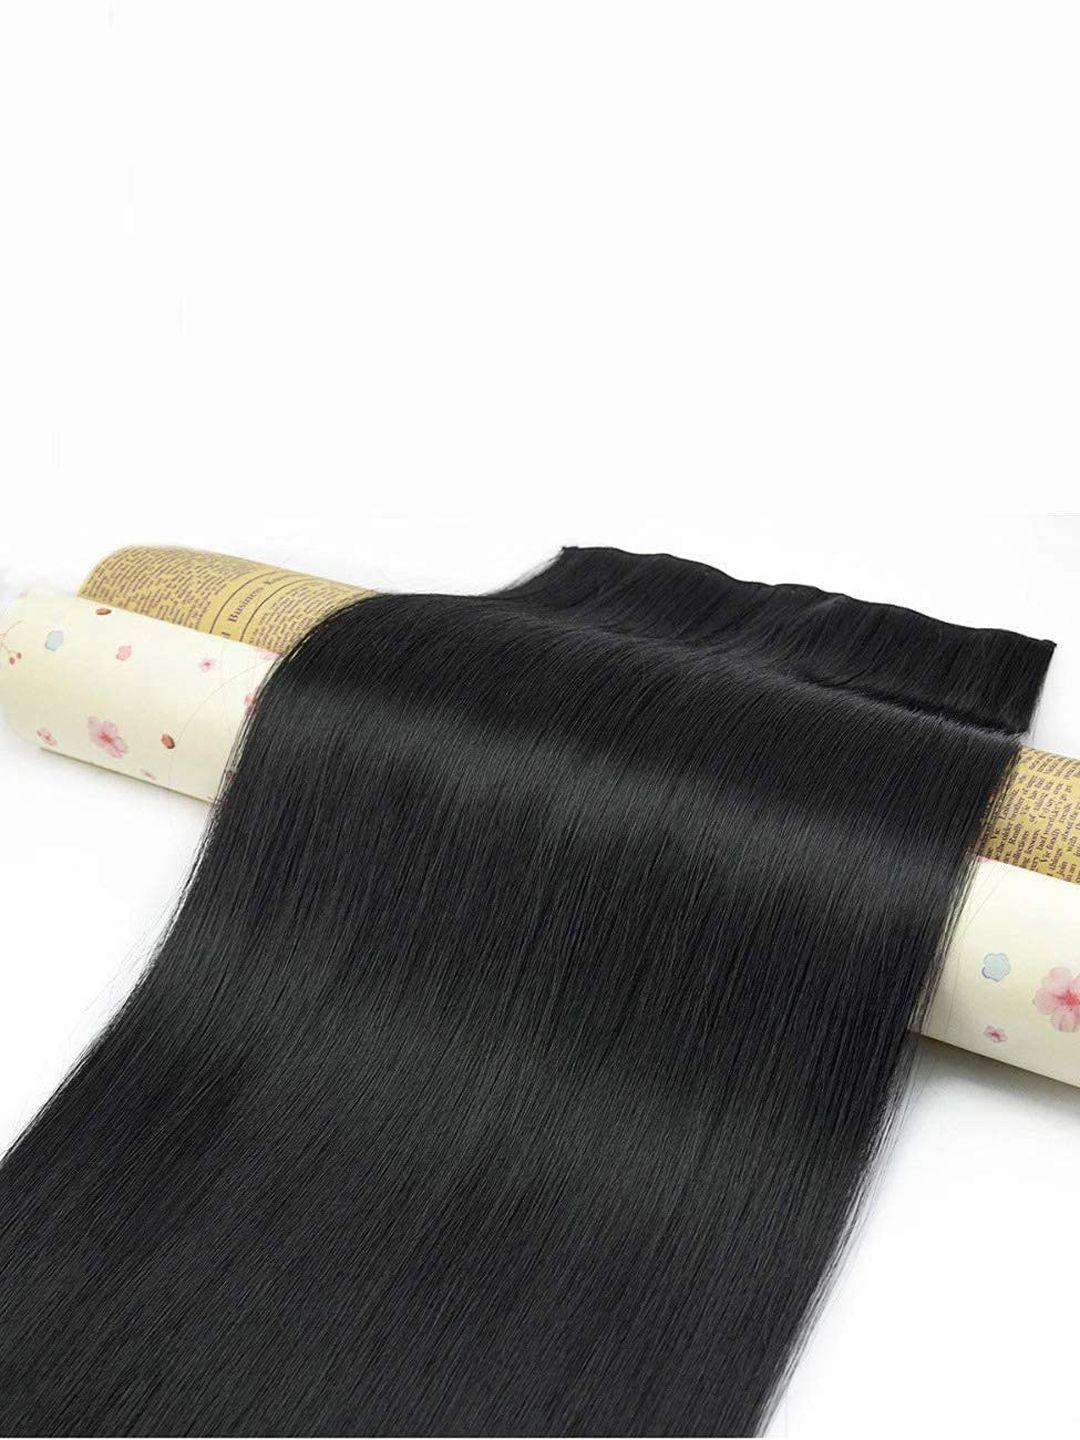 chanderkash 5clips based synthetic nylon straight hair extension - black